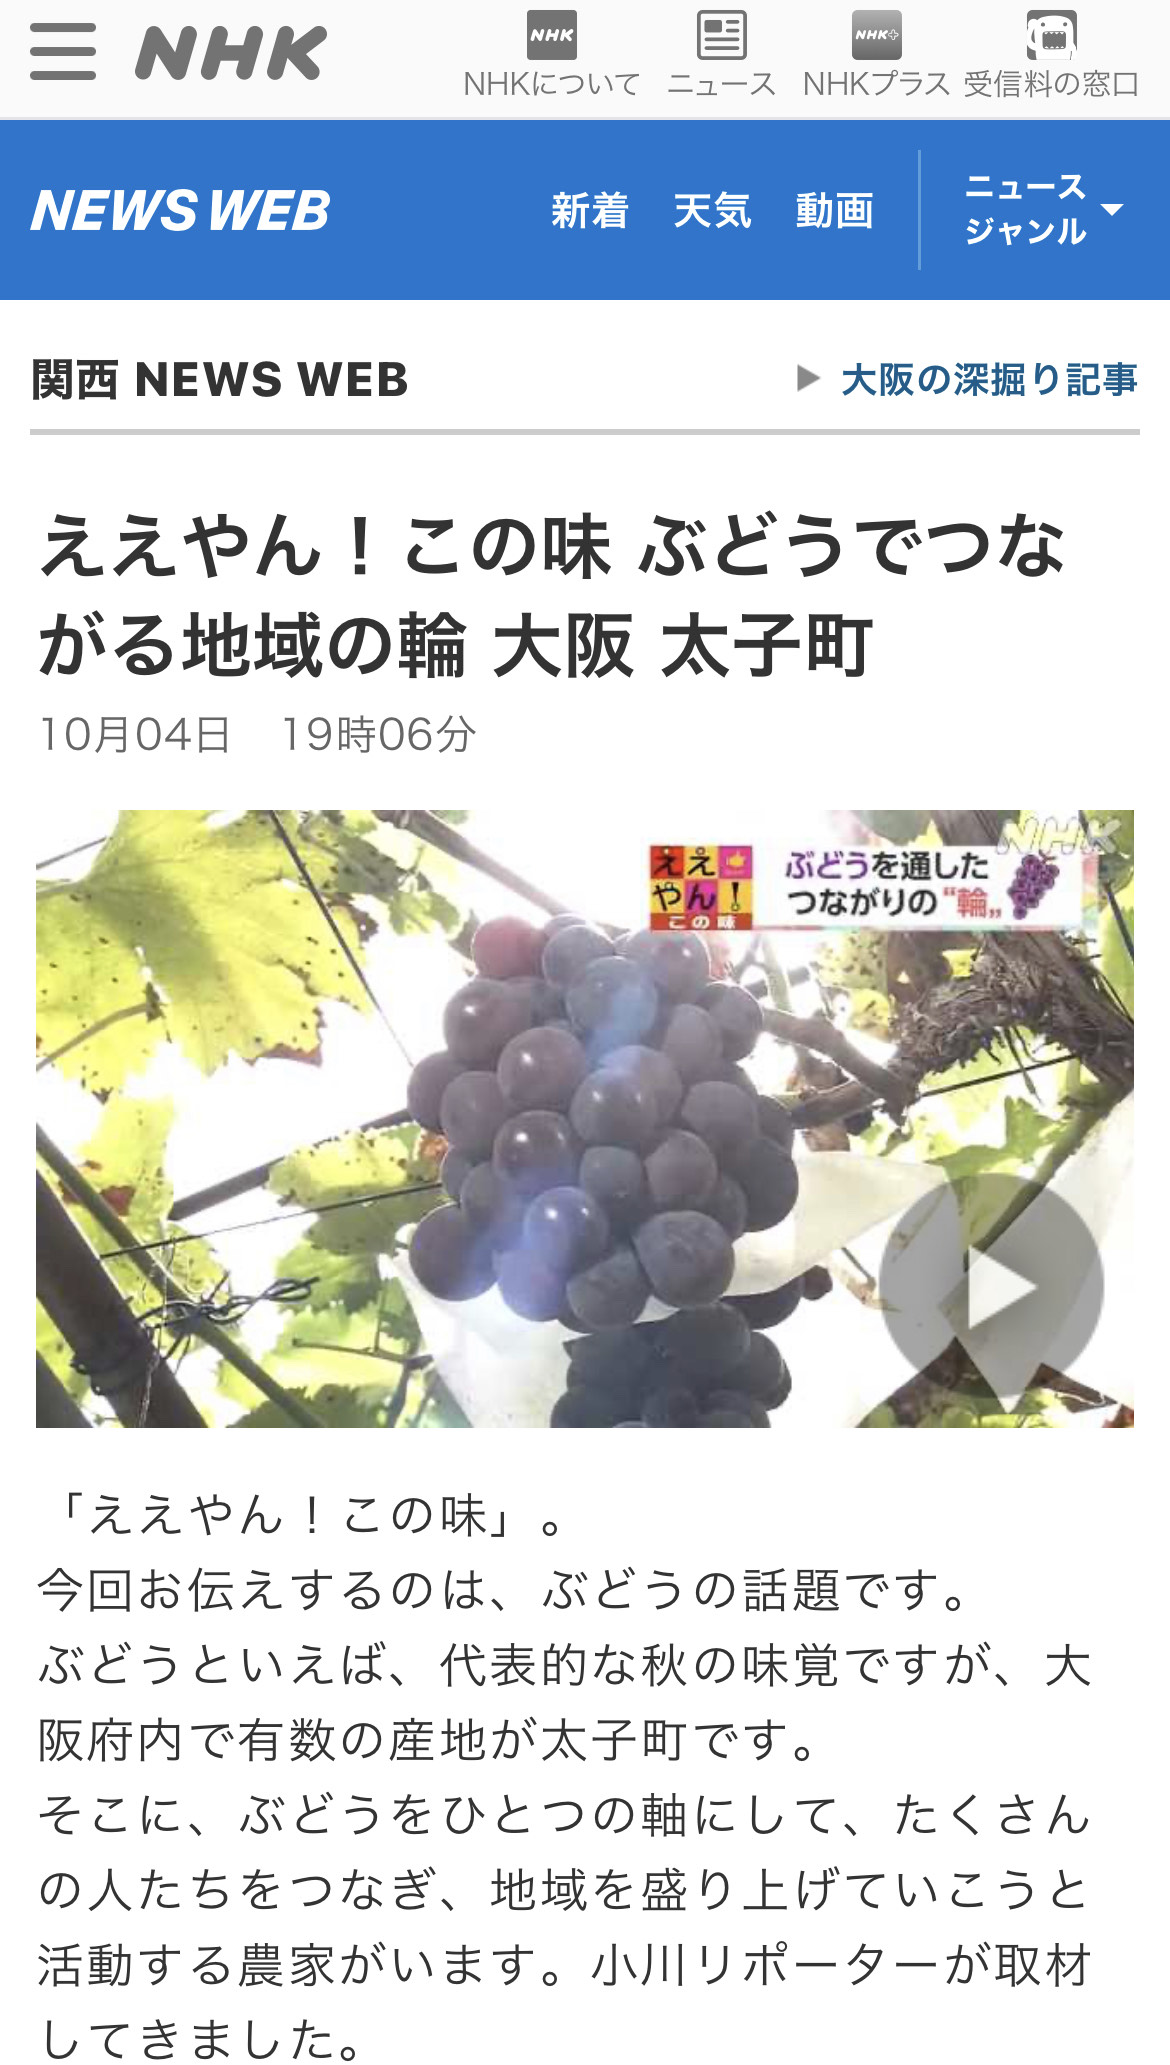 NHK「ほっと関西」のニュースに出演